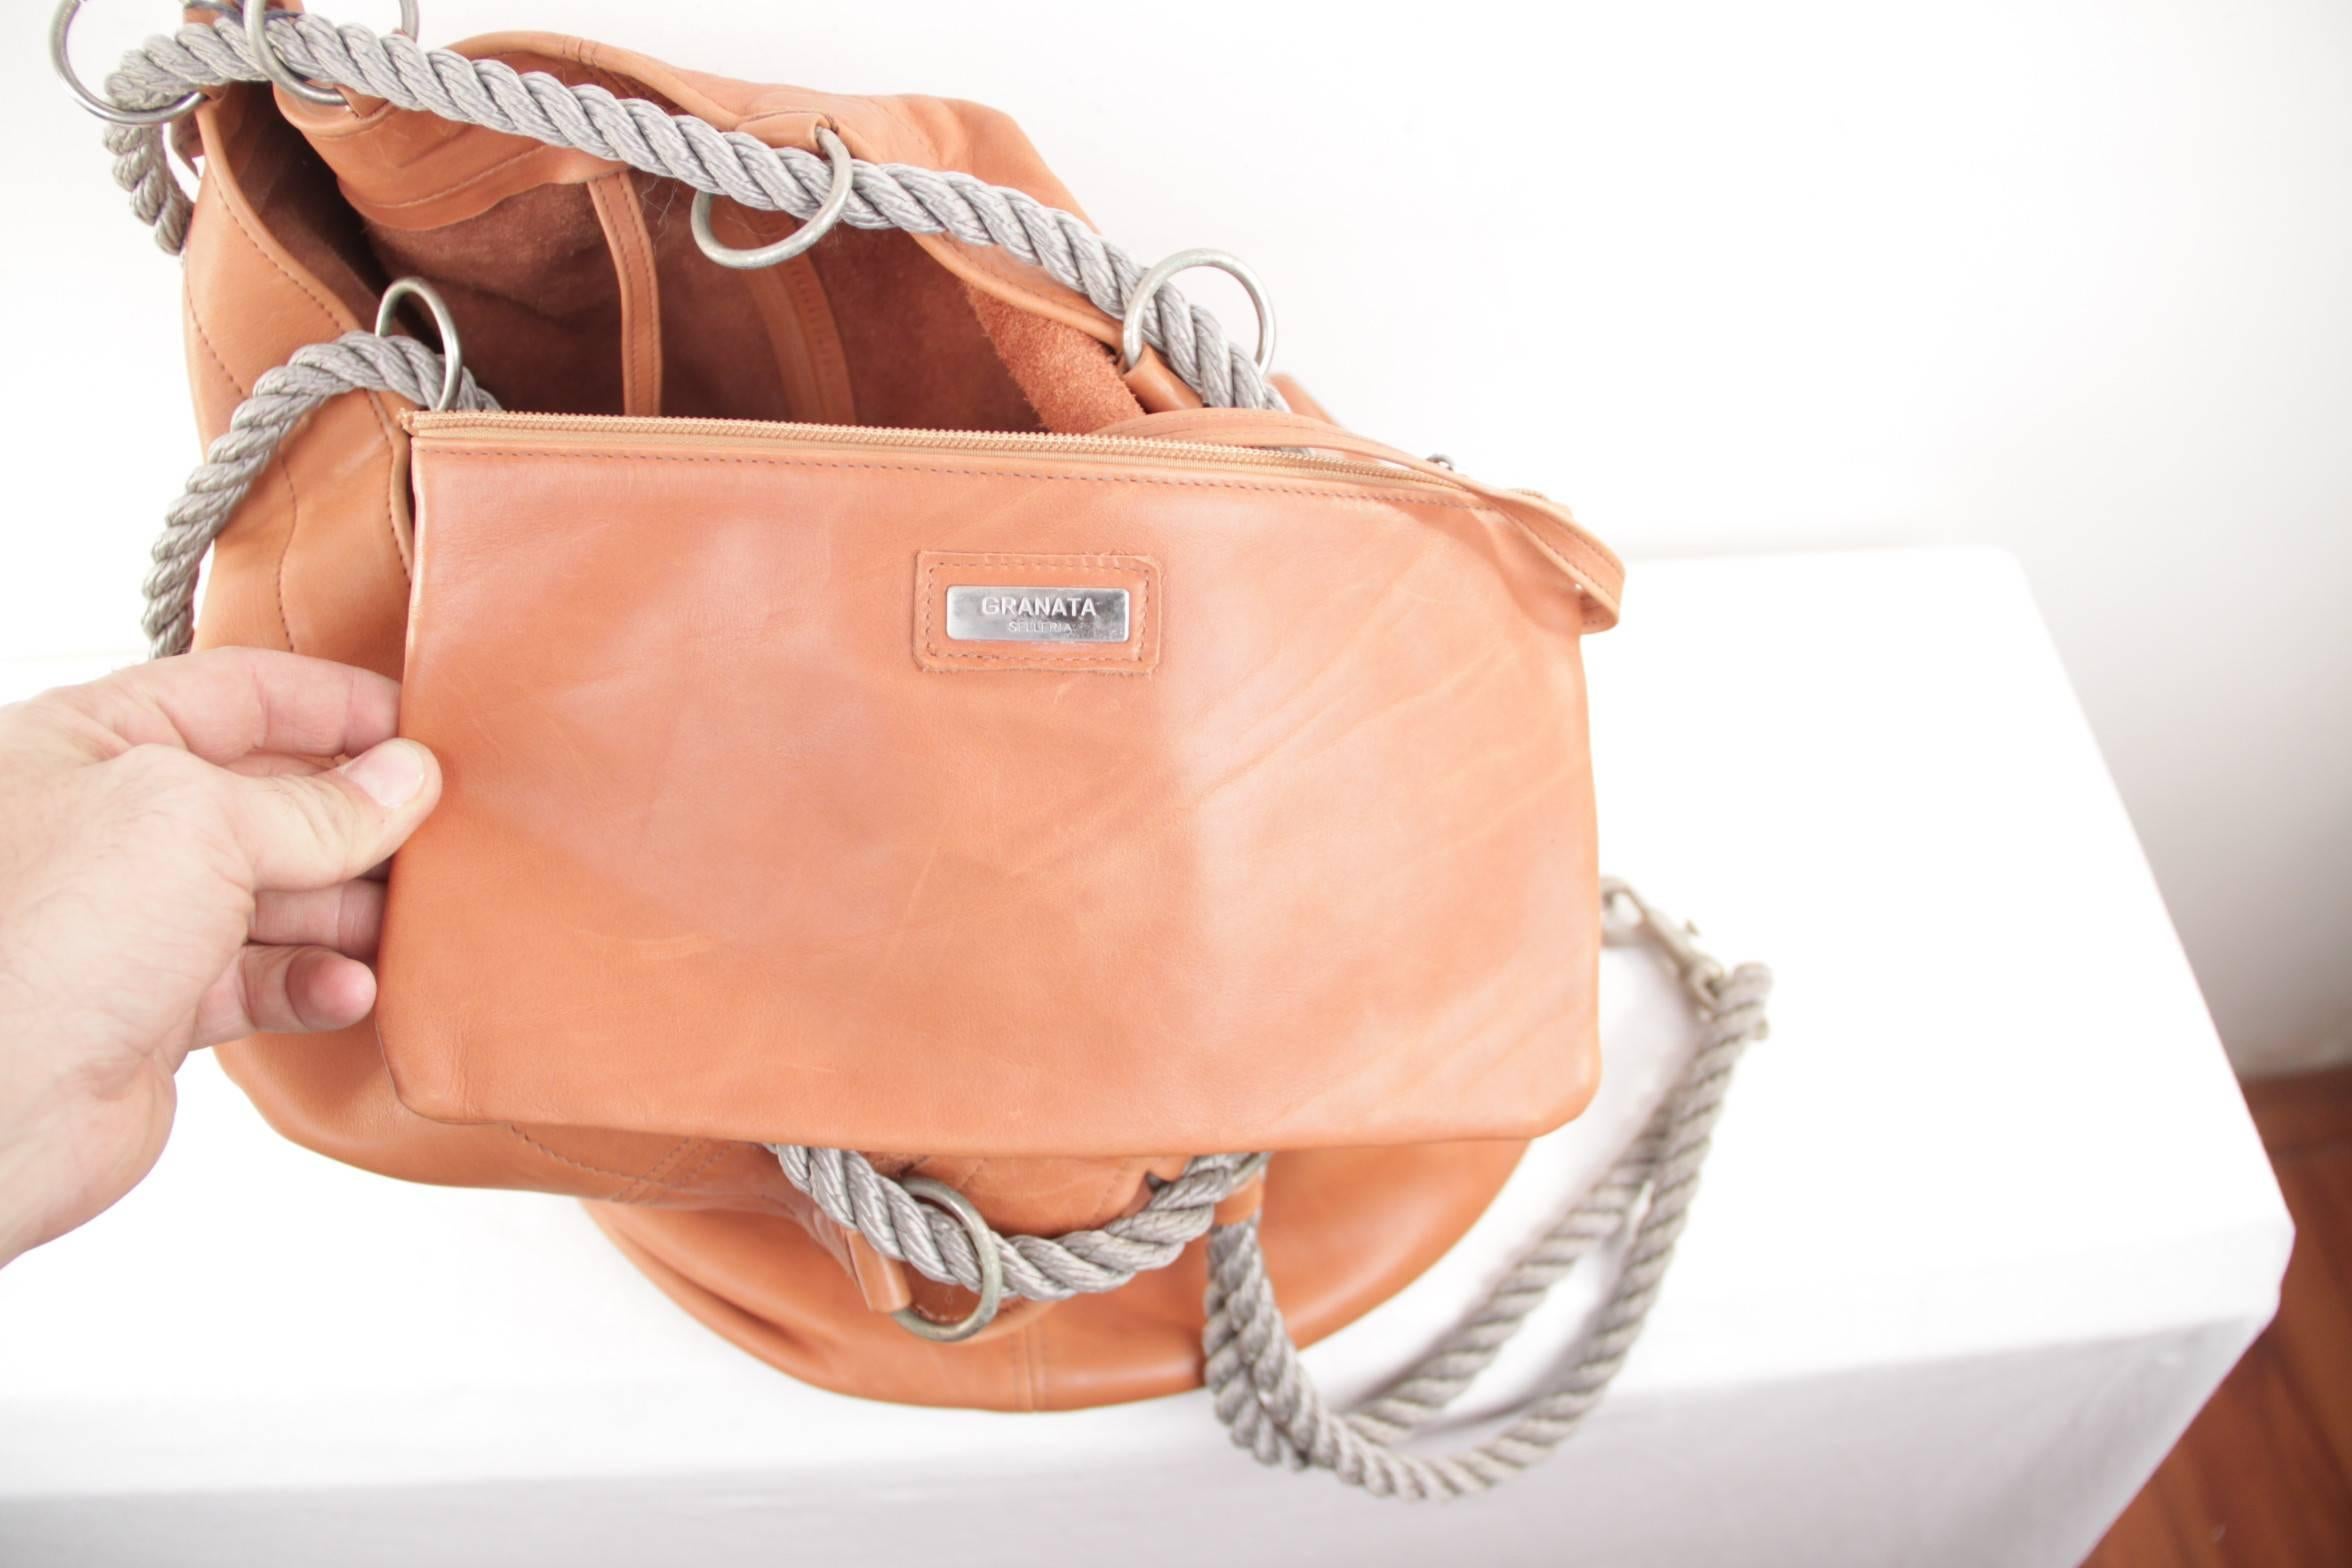 Women's GRANATA SELLERIA Tan Leather OVERSIZED SAILOR BAG Duffel Weekender TRAVEL